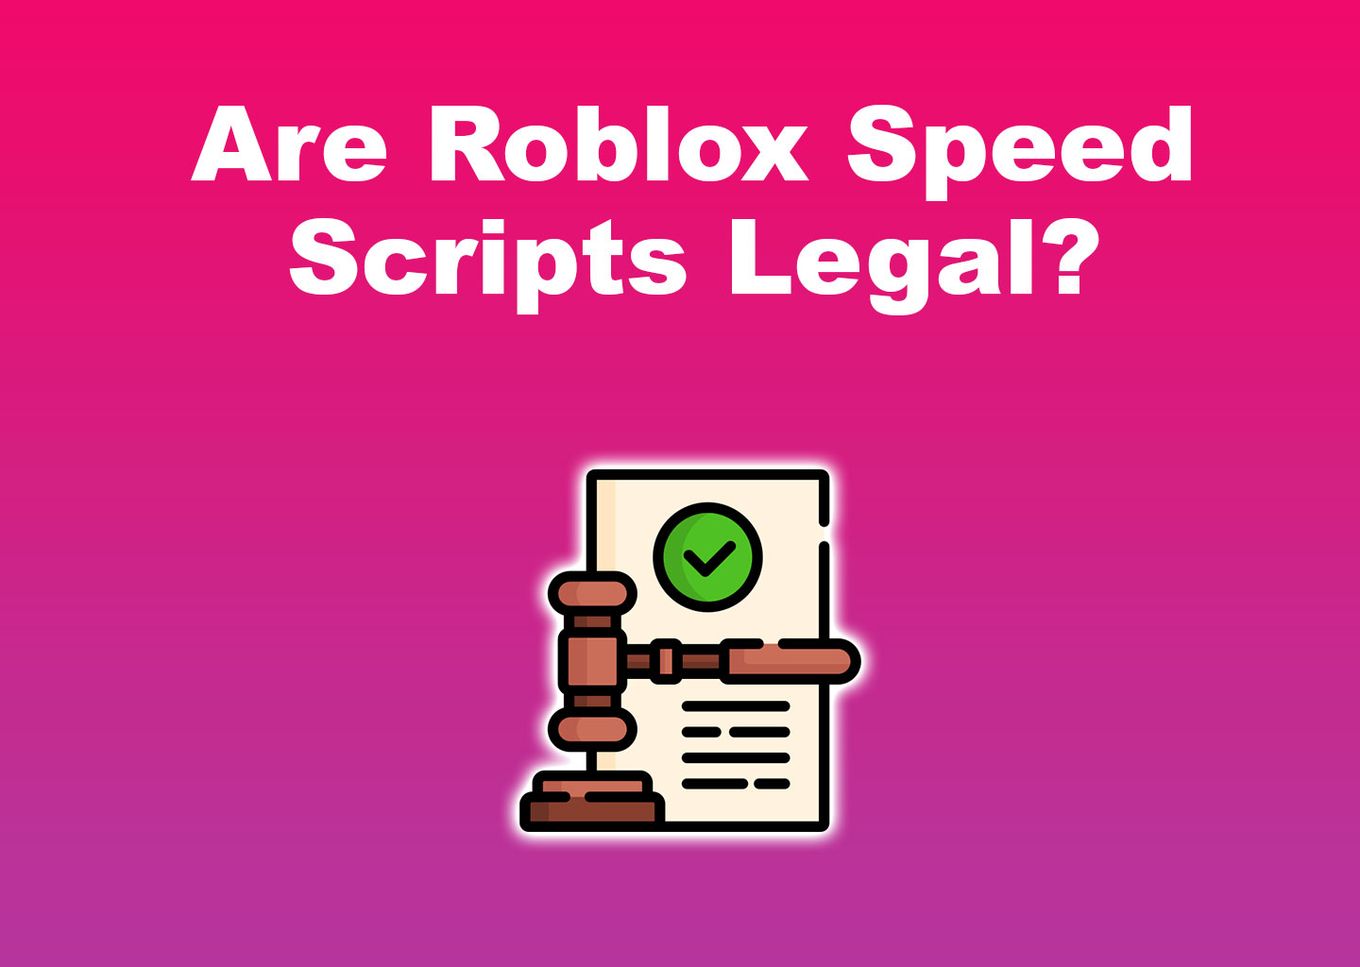 Roblox Speed Script [What Is It + How to Use] - Alvaro Trigo's Blog